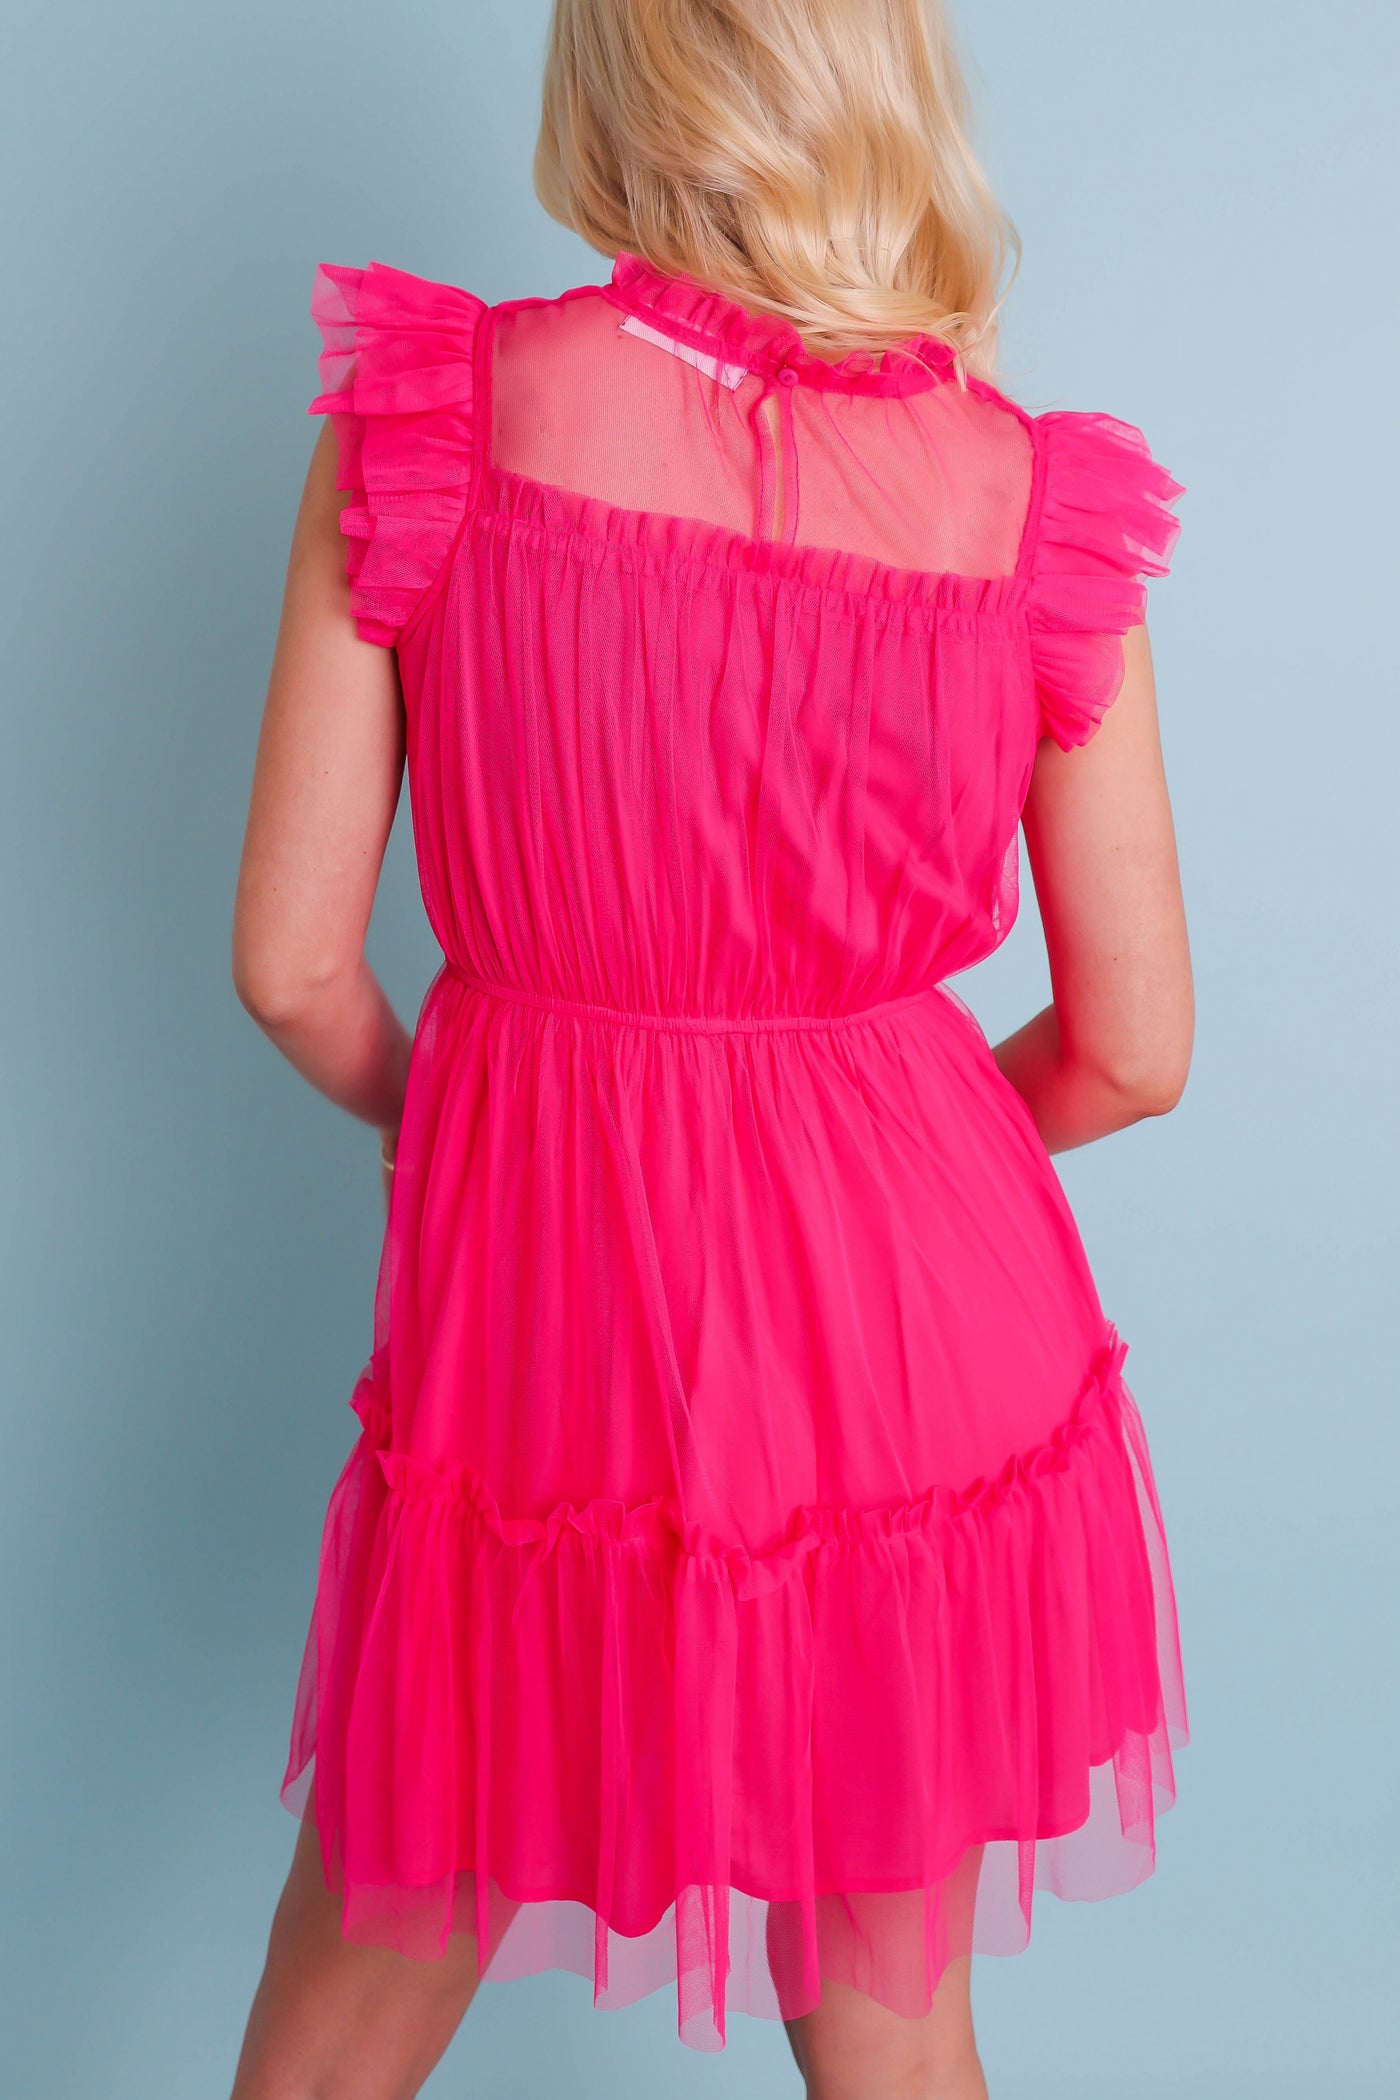 RESTOCK: Prim and Proper Dress-Pink